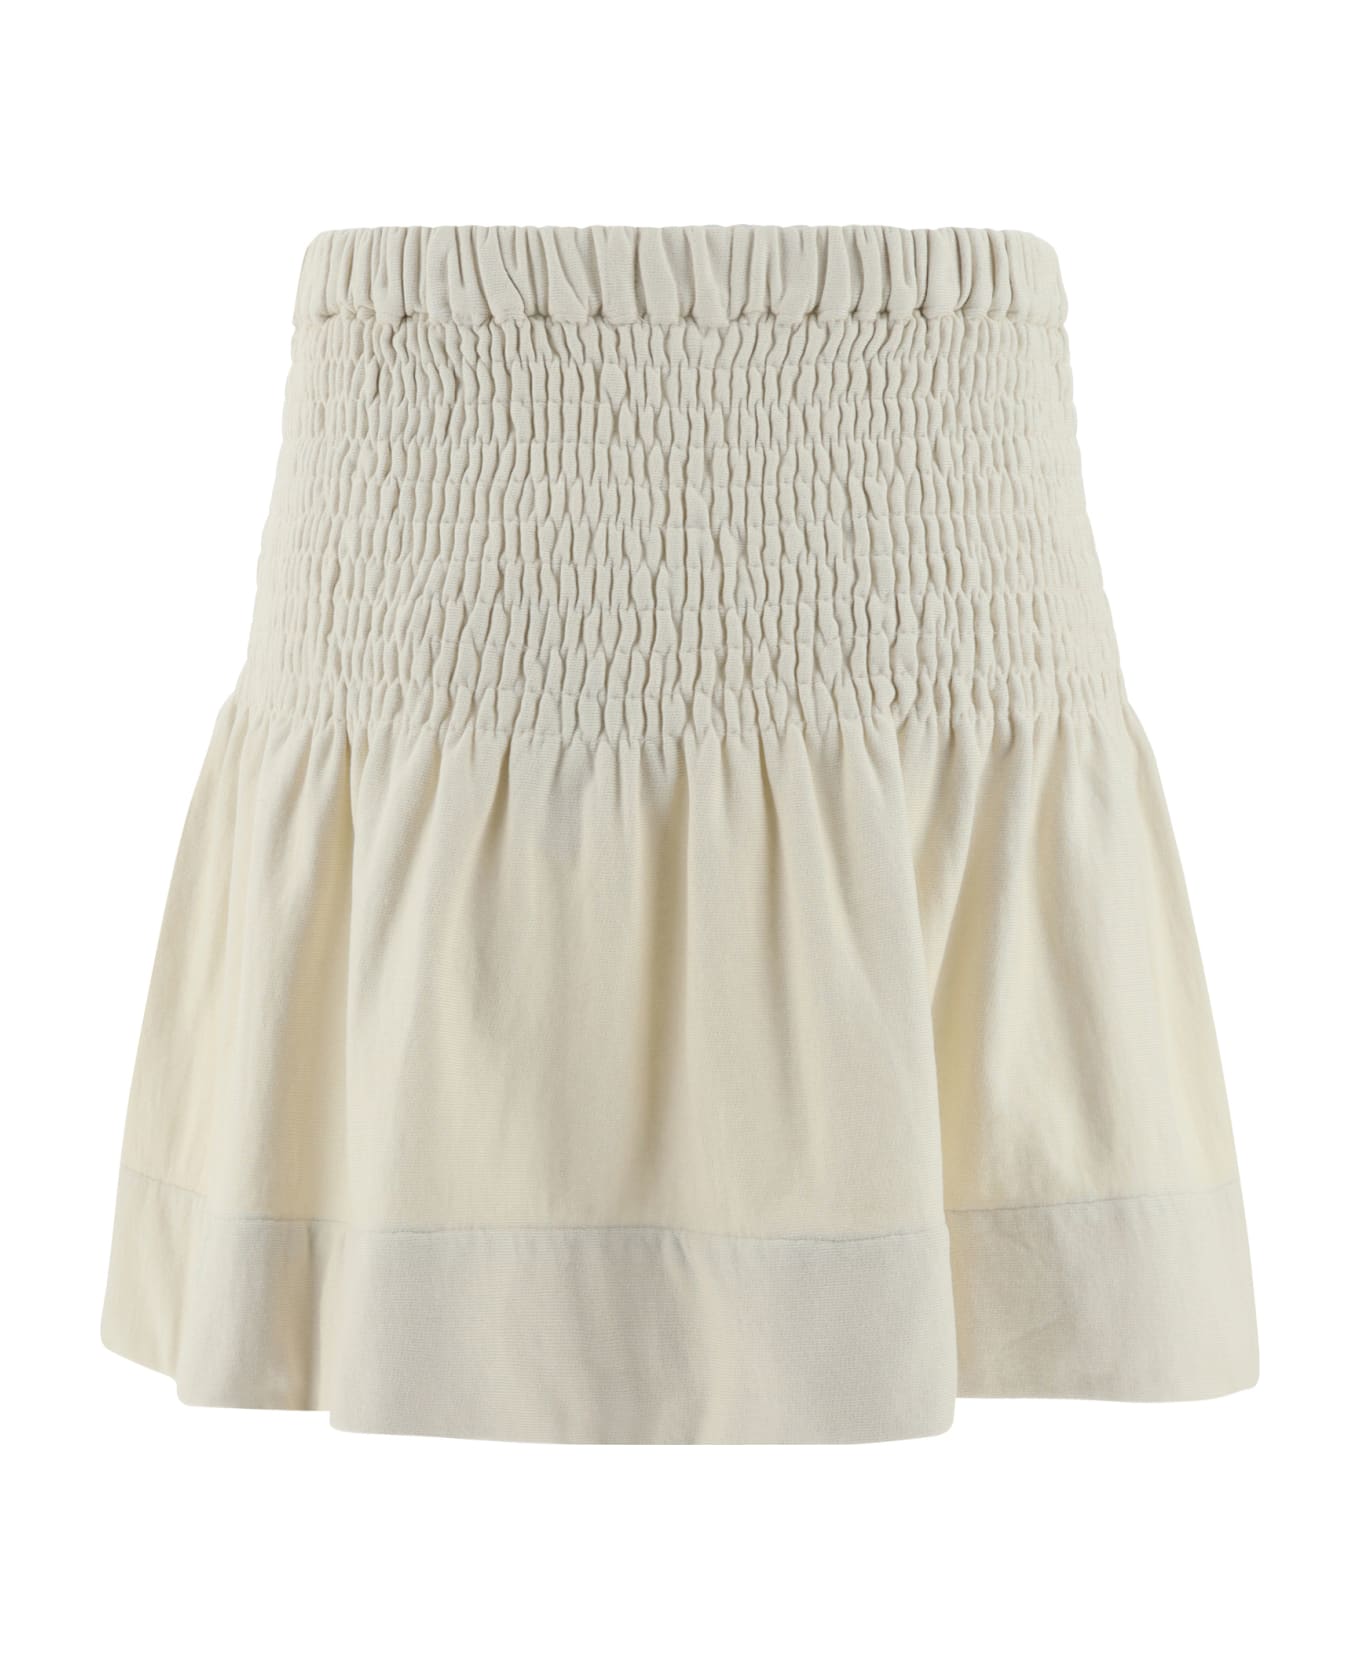 Marant Étoile Pacifica Mini Skirt - Ecru